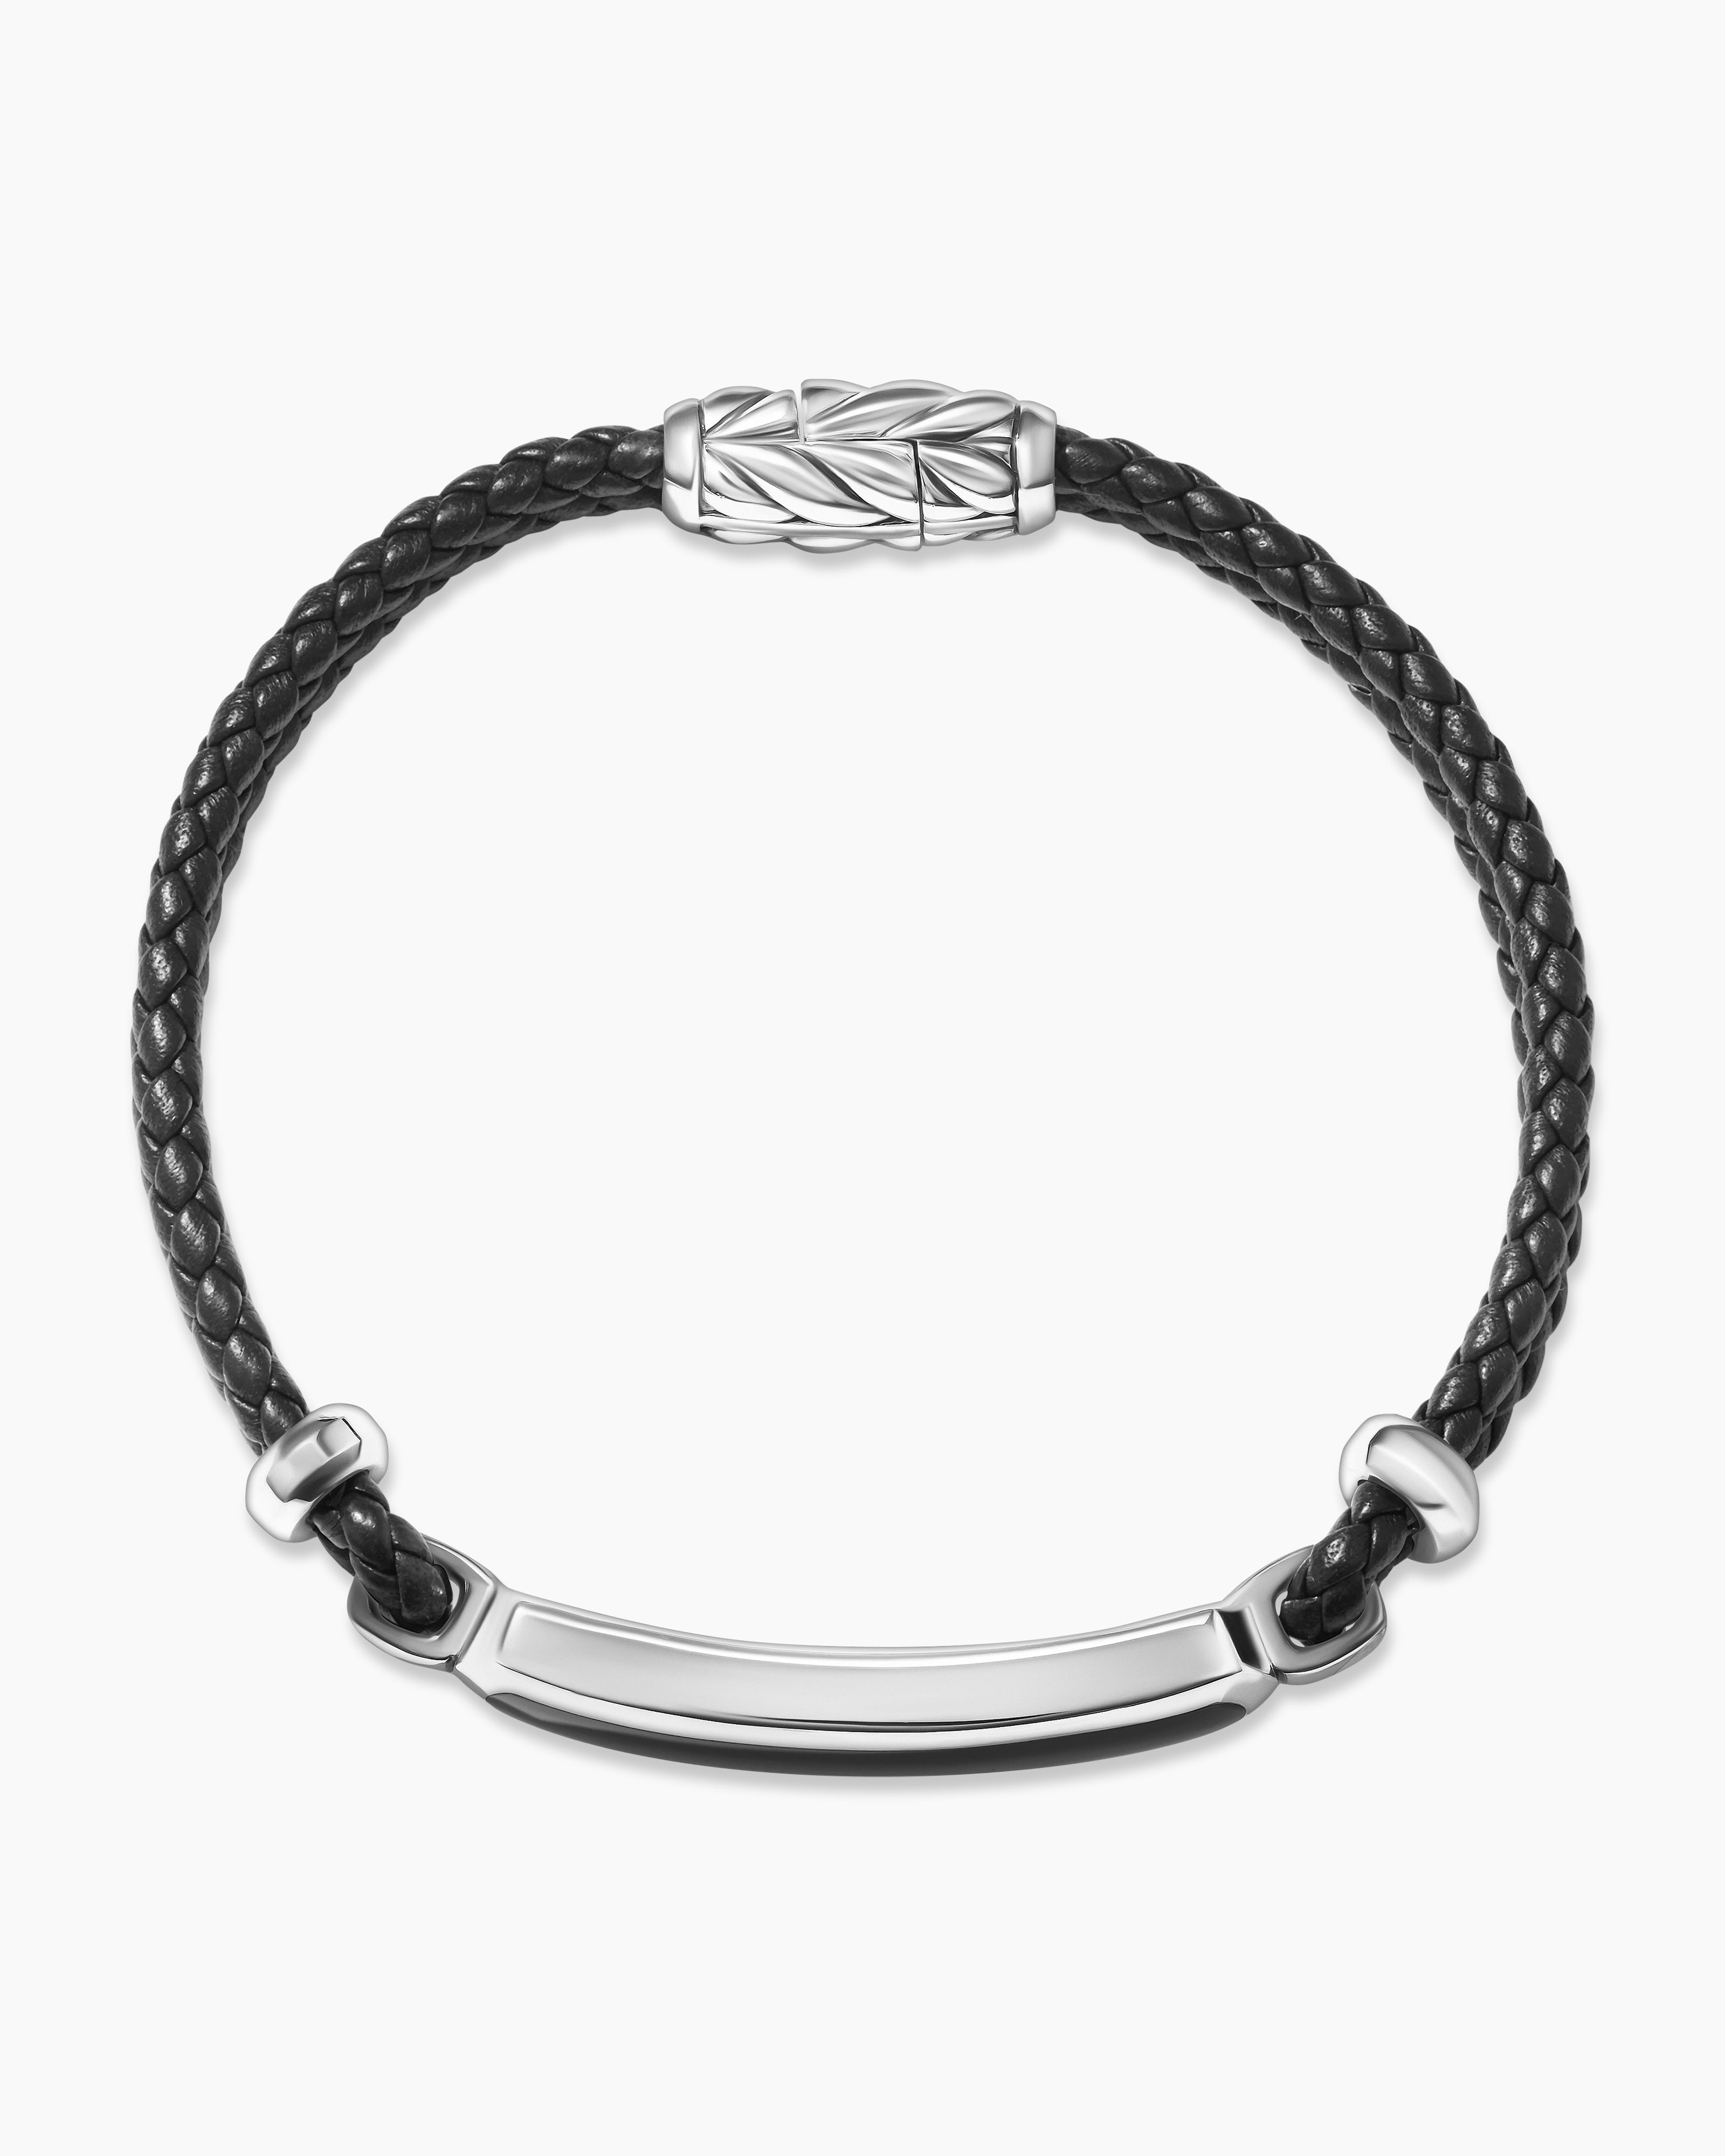 7 Aqeeq Agate Bracelet In Khalis Chandi (silver bracelet) - Homely.pk